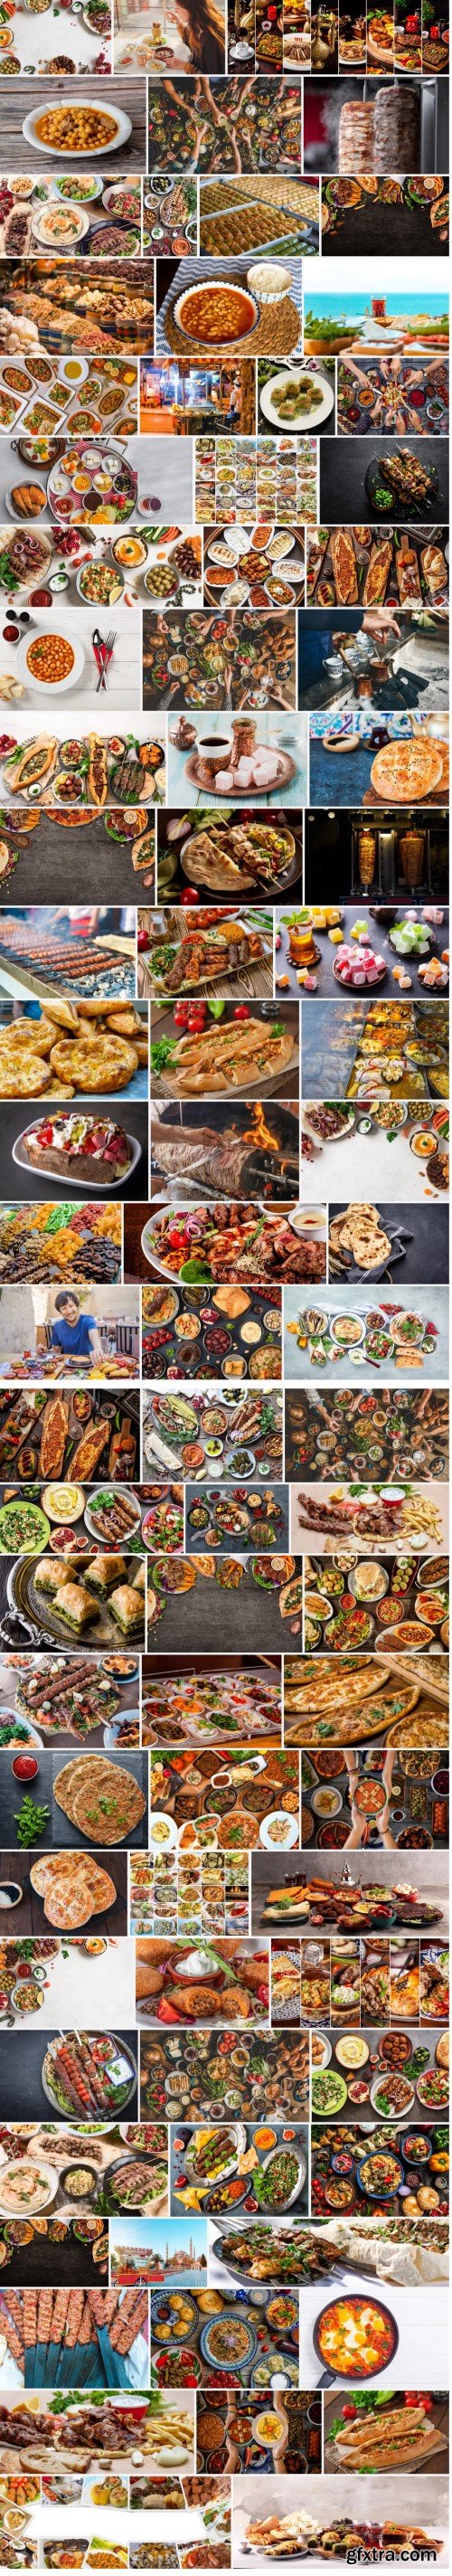 Turkish Food Stock Images